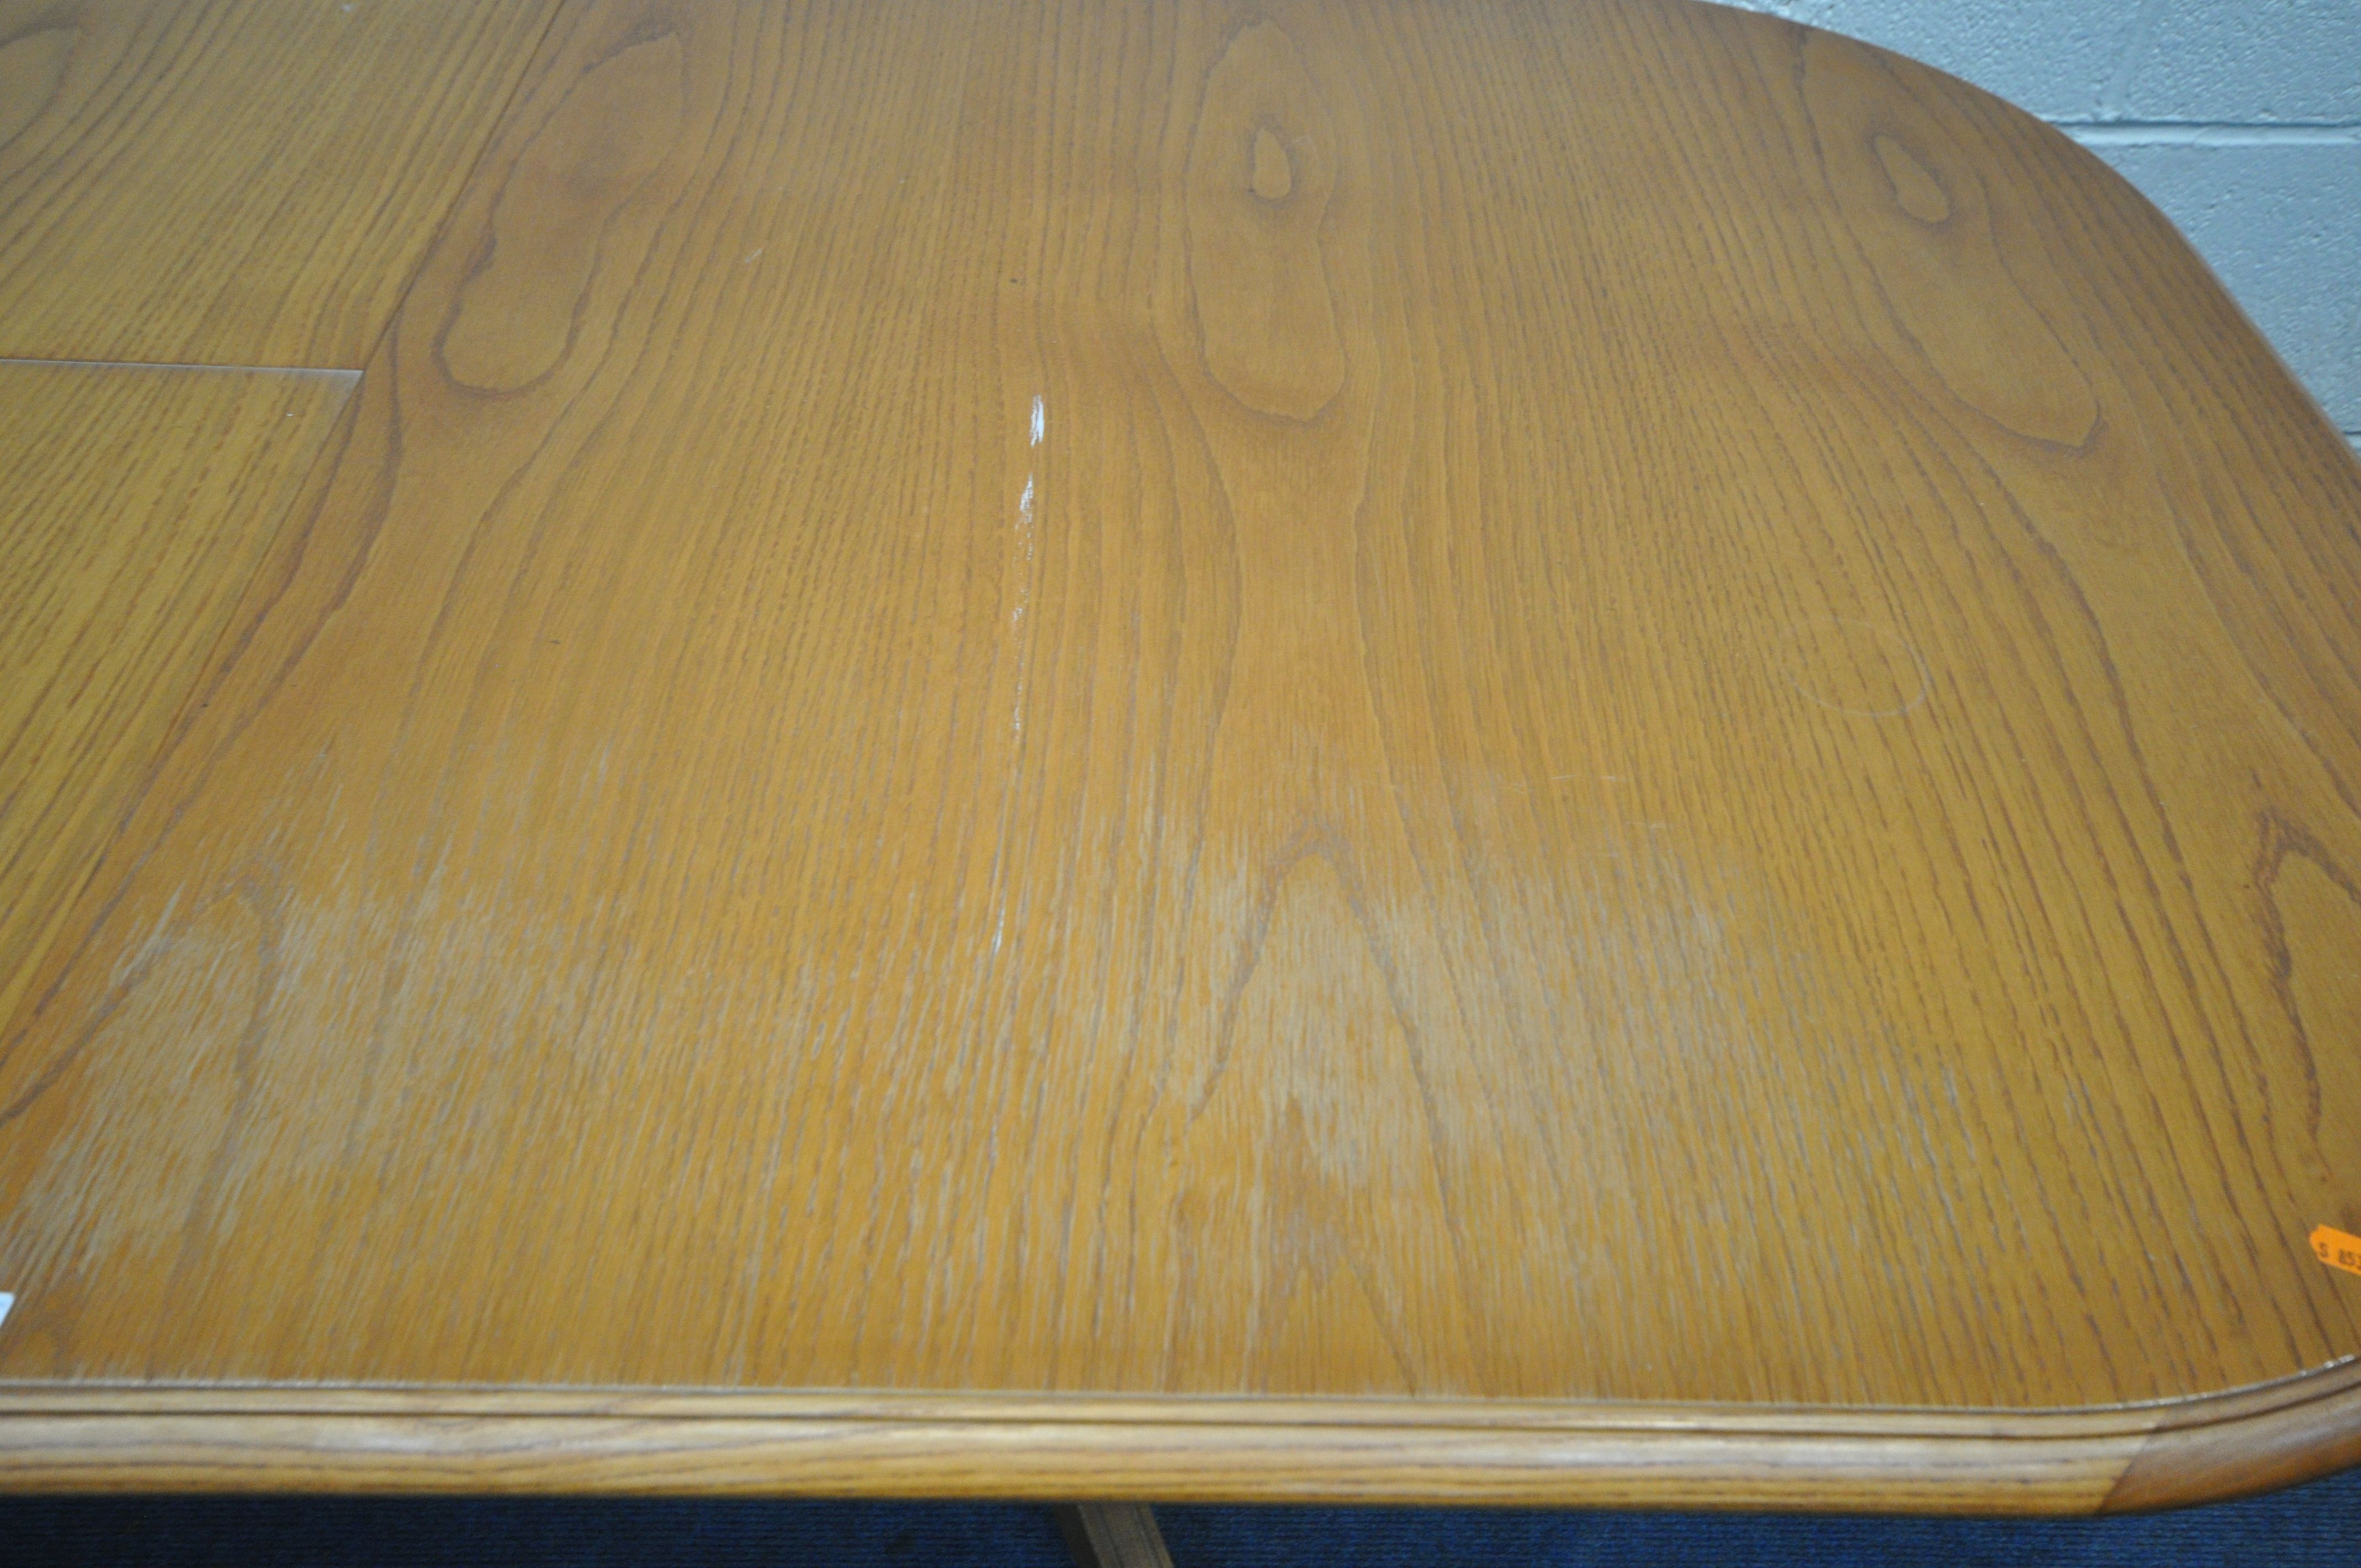 A JENTIQUE OAK OVAL EXTENDING DINING TABLE, open length 211cm x closed length 165cm x depth 93cm x - Image 5 of 7